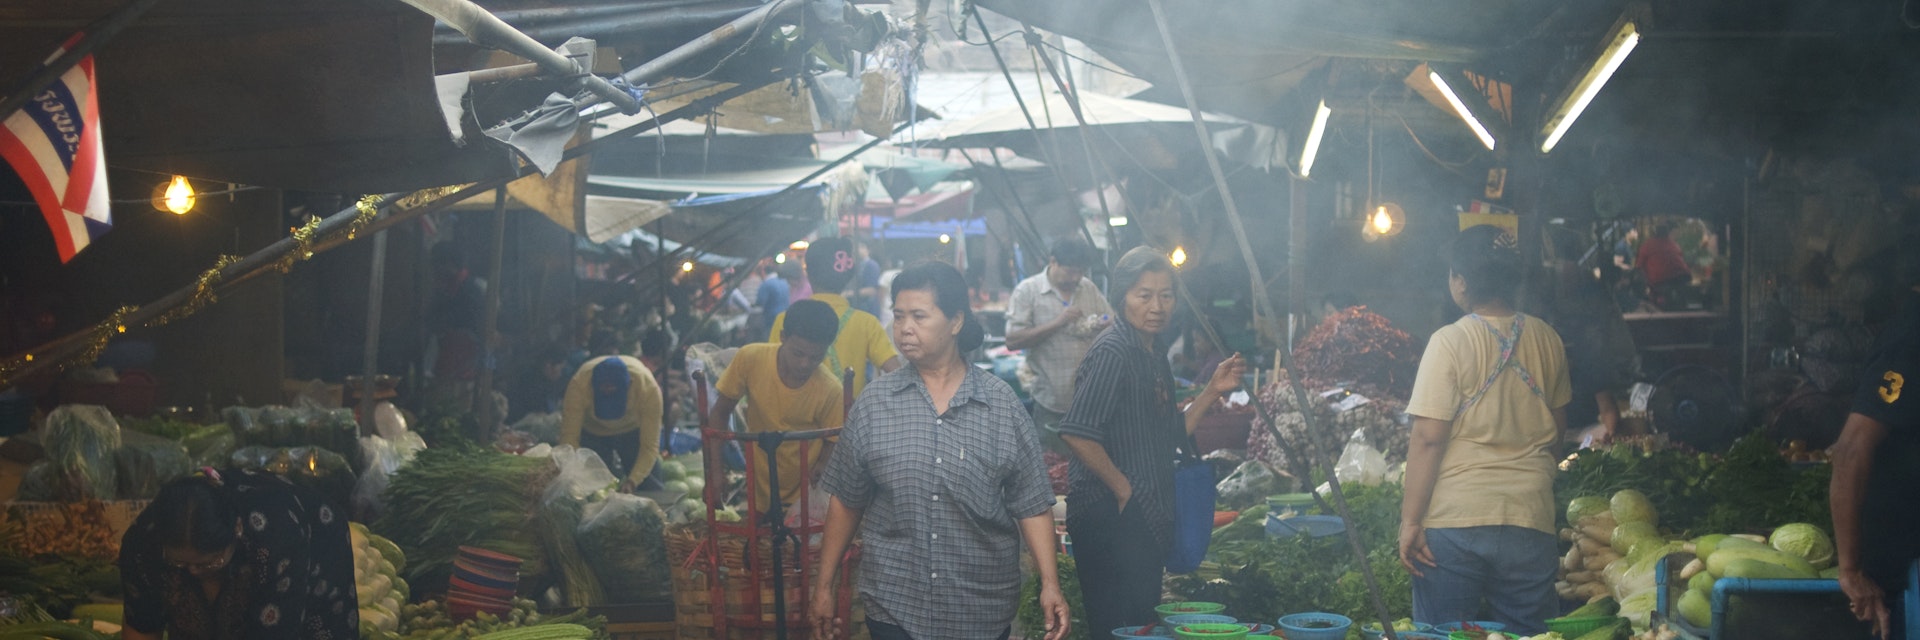 Smokey morning at Nonthaburi's fresh market.